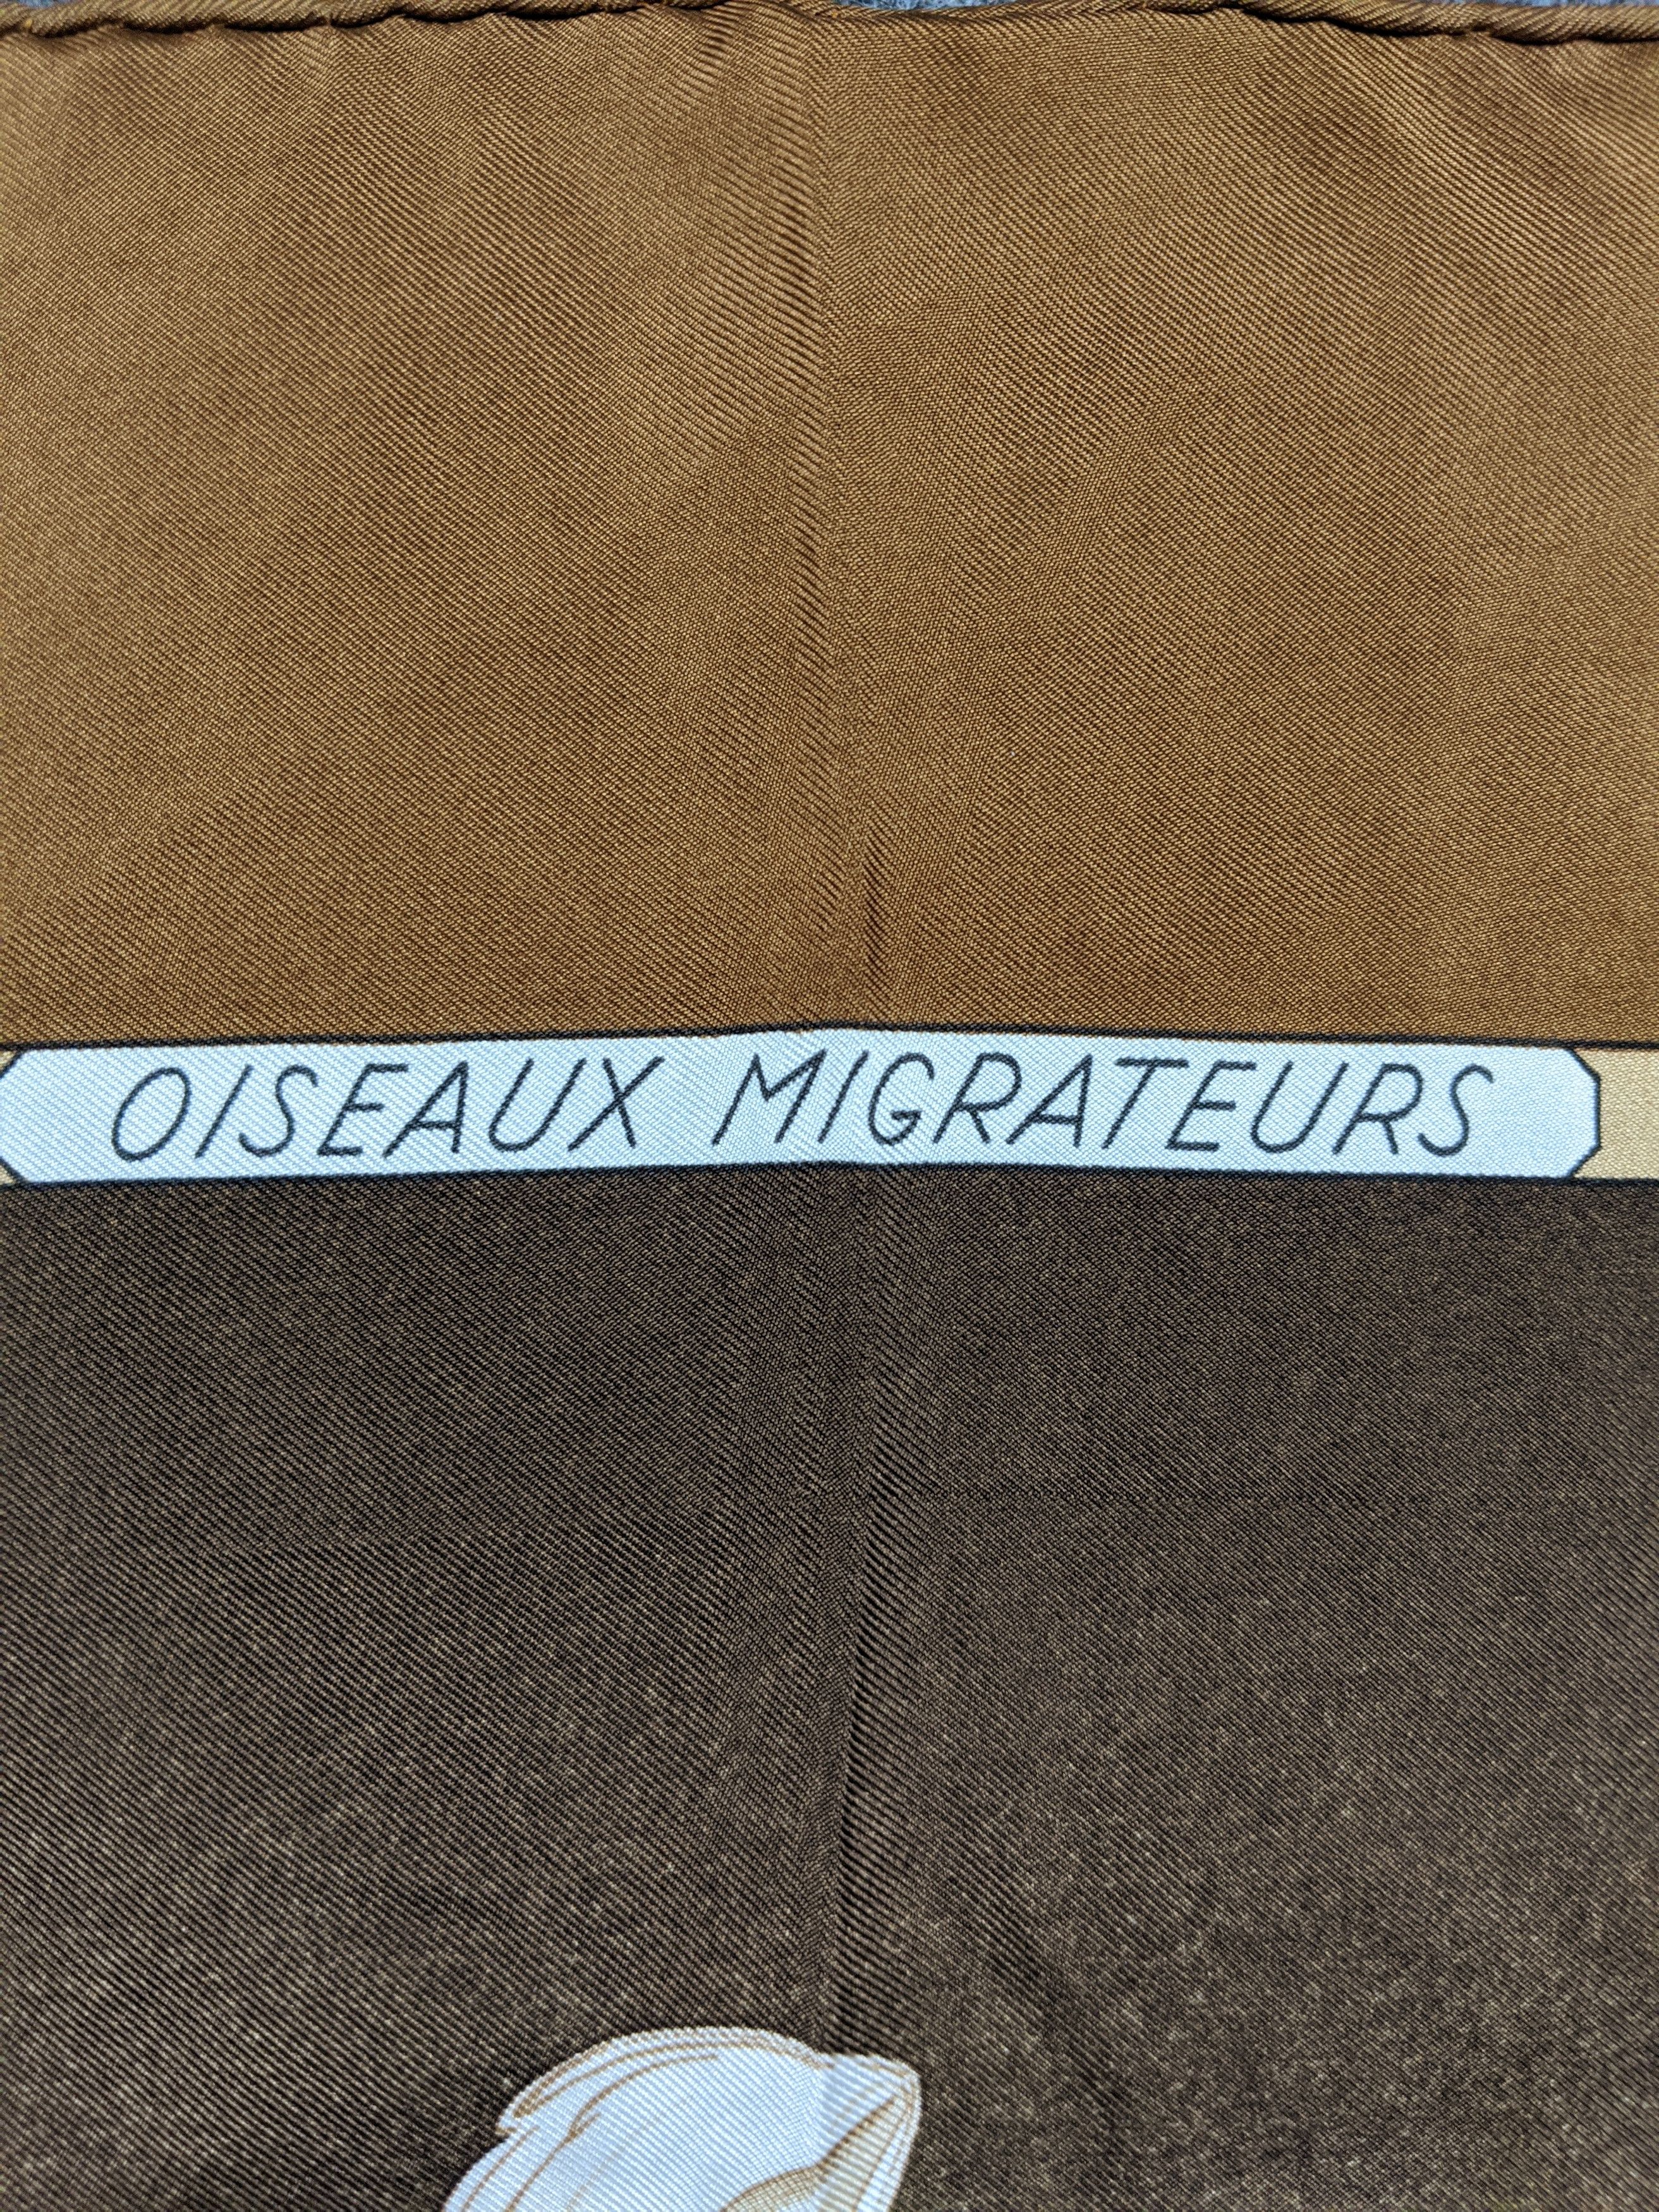 Hermes Oiseaux Migrateurs Silk Scarf - 4